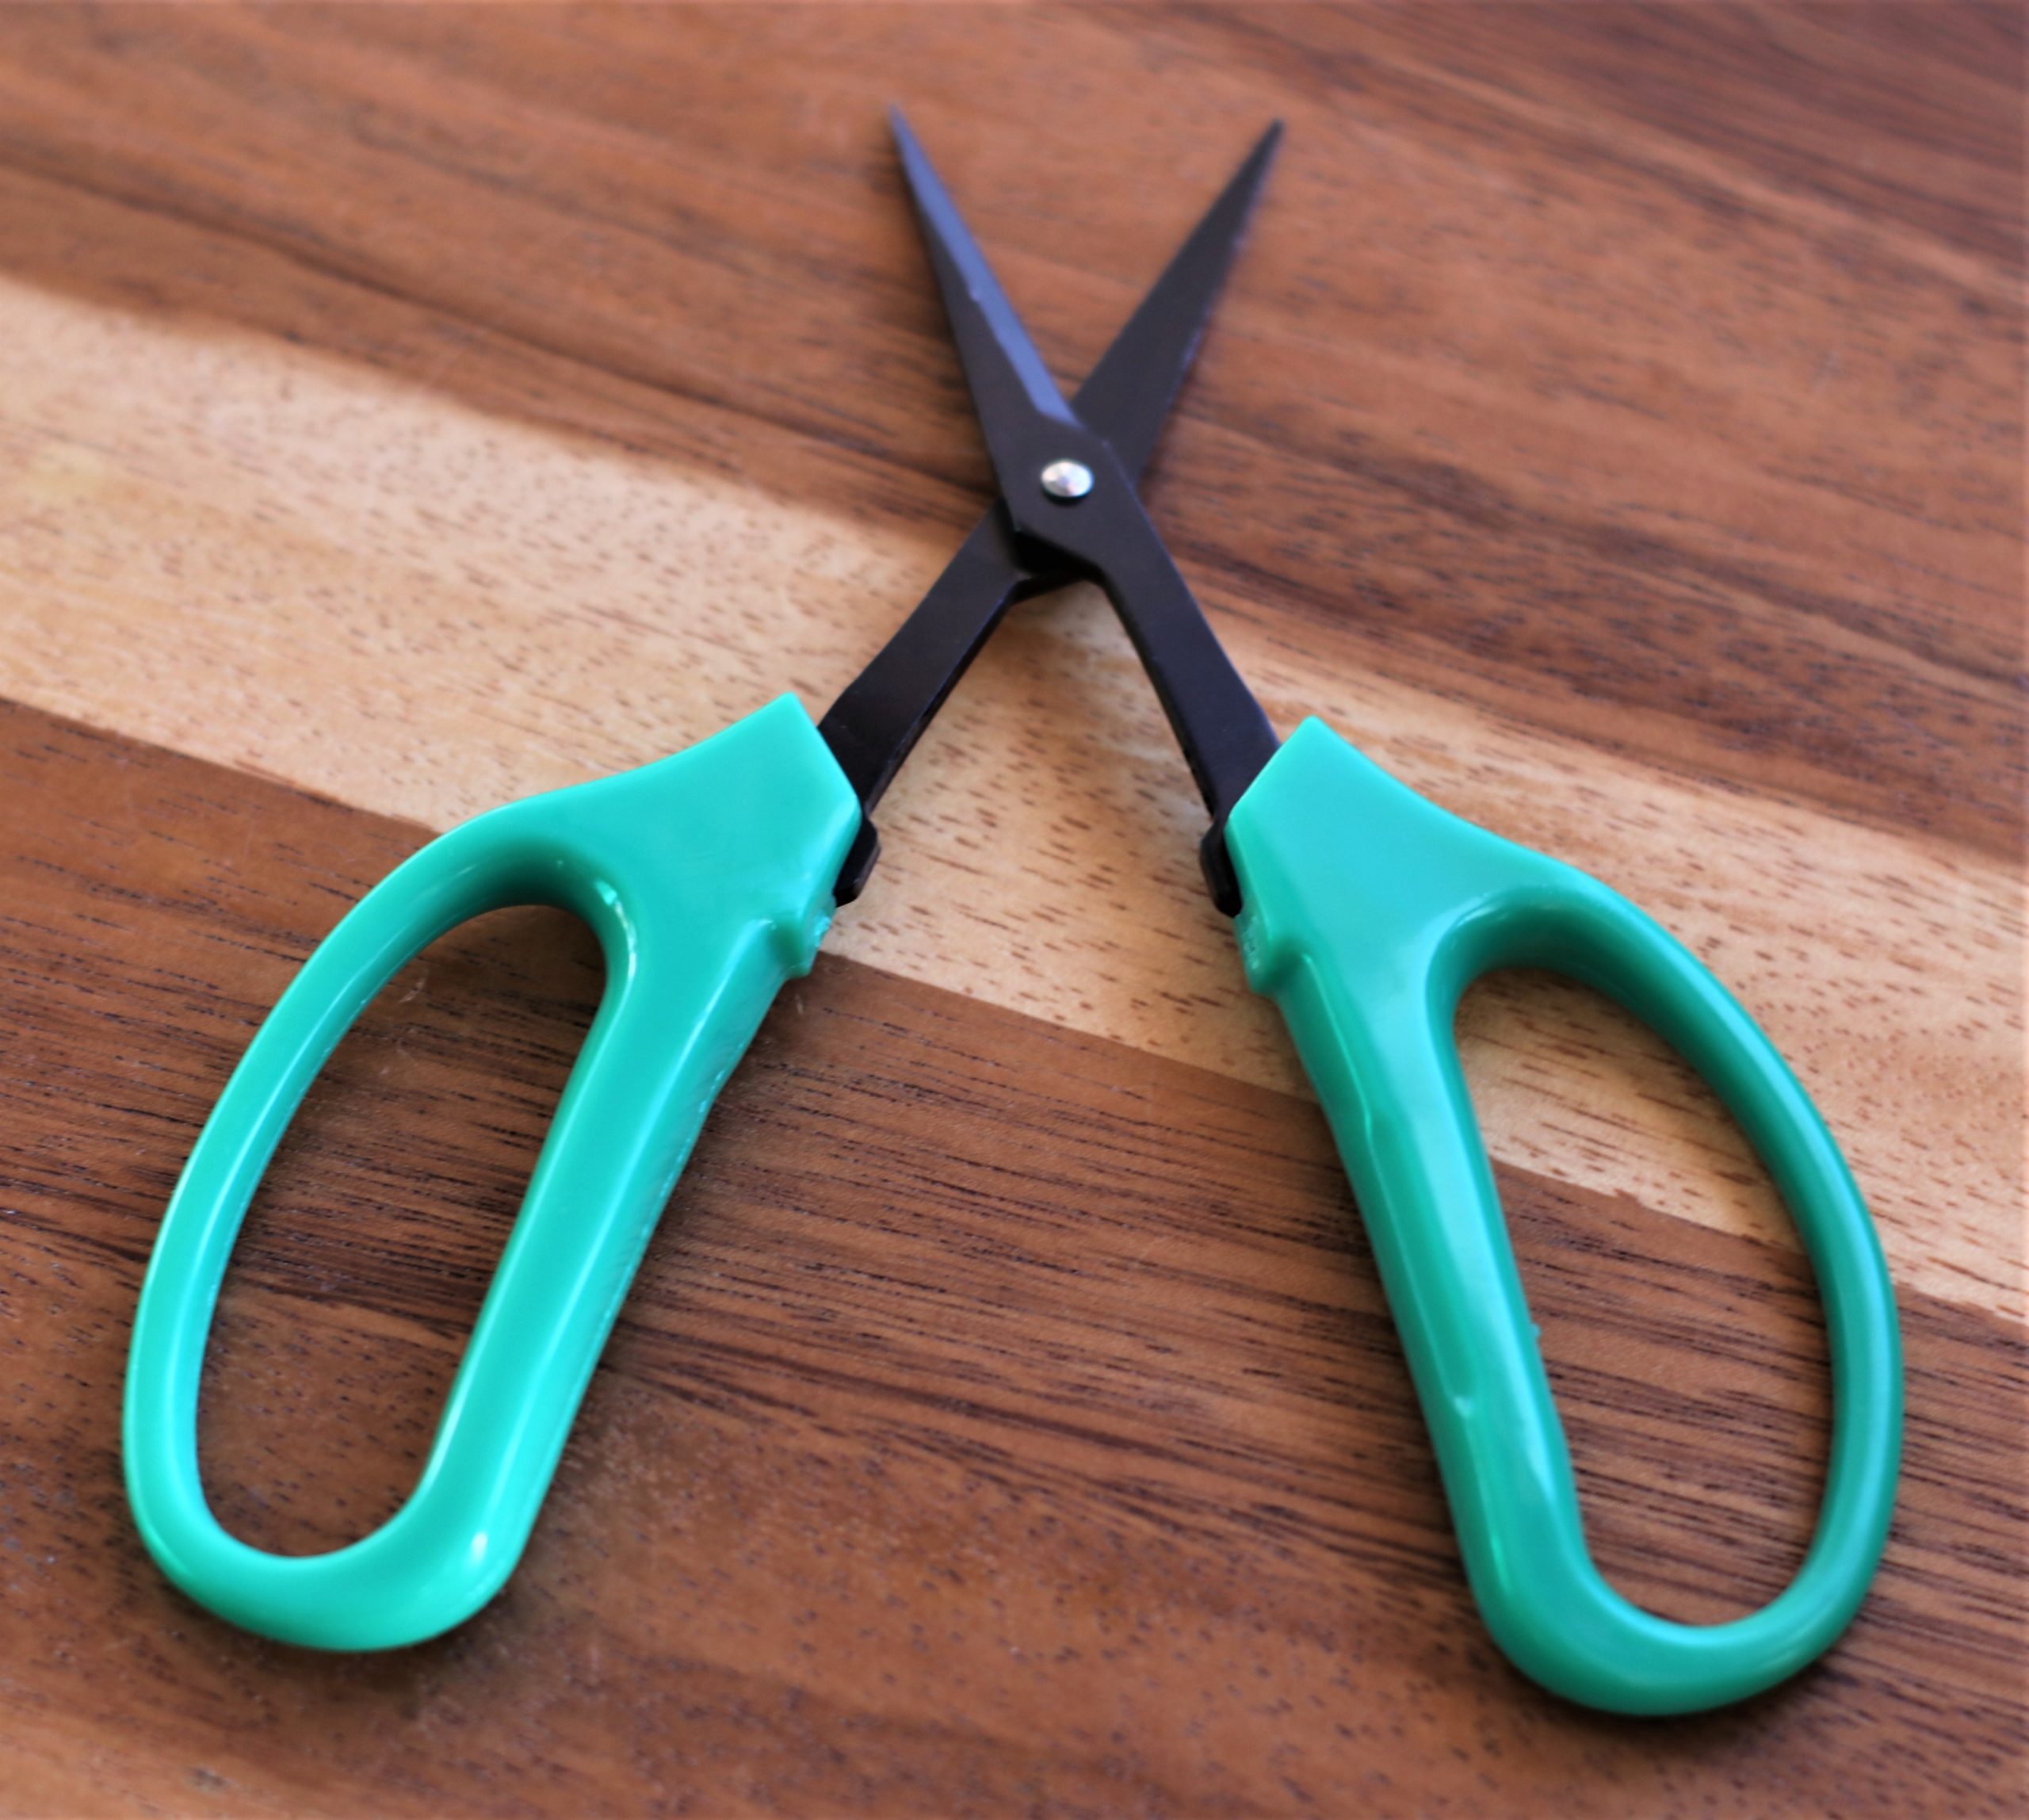 PRO 420 Trim Kit (Spring Loaded Scissors, Bonsai Scissors, Cleaning  Solution) Bud Trimming